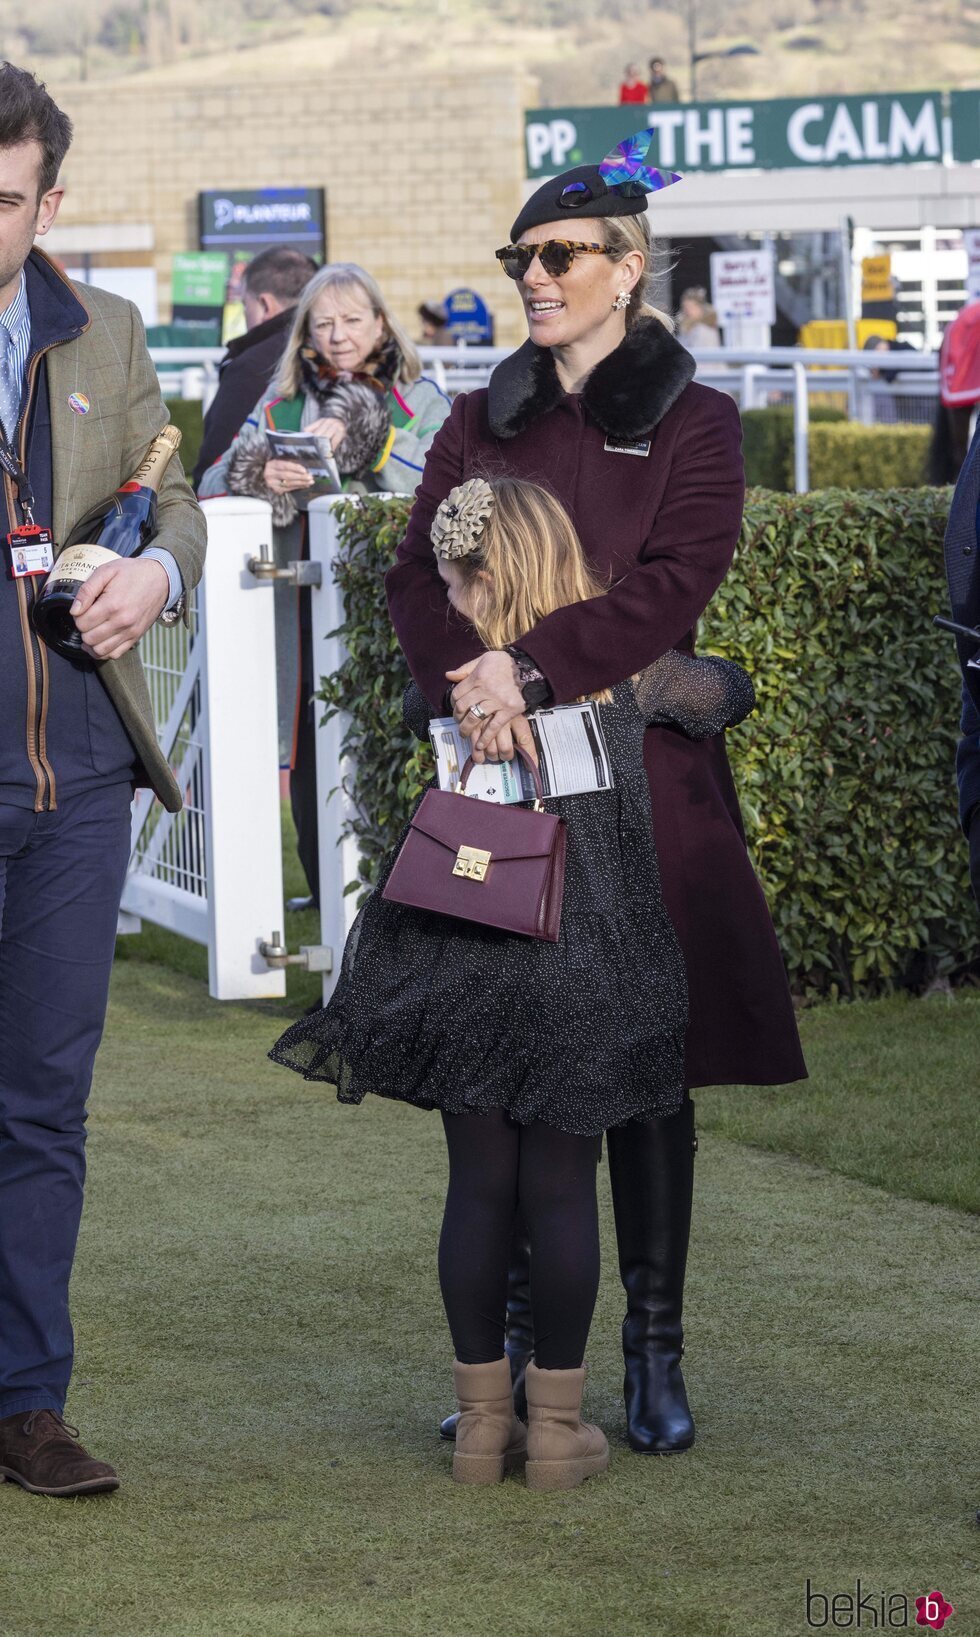 Zara Phillips con su hija Mia Tindall abrazada en Cheltenham